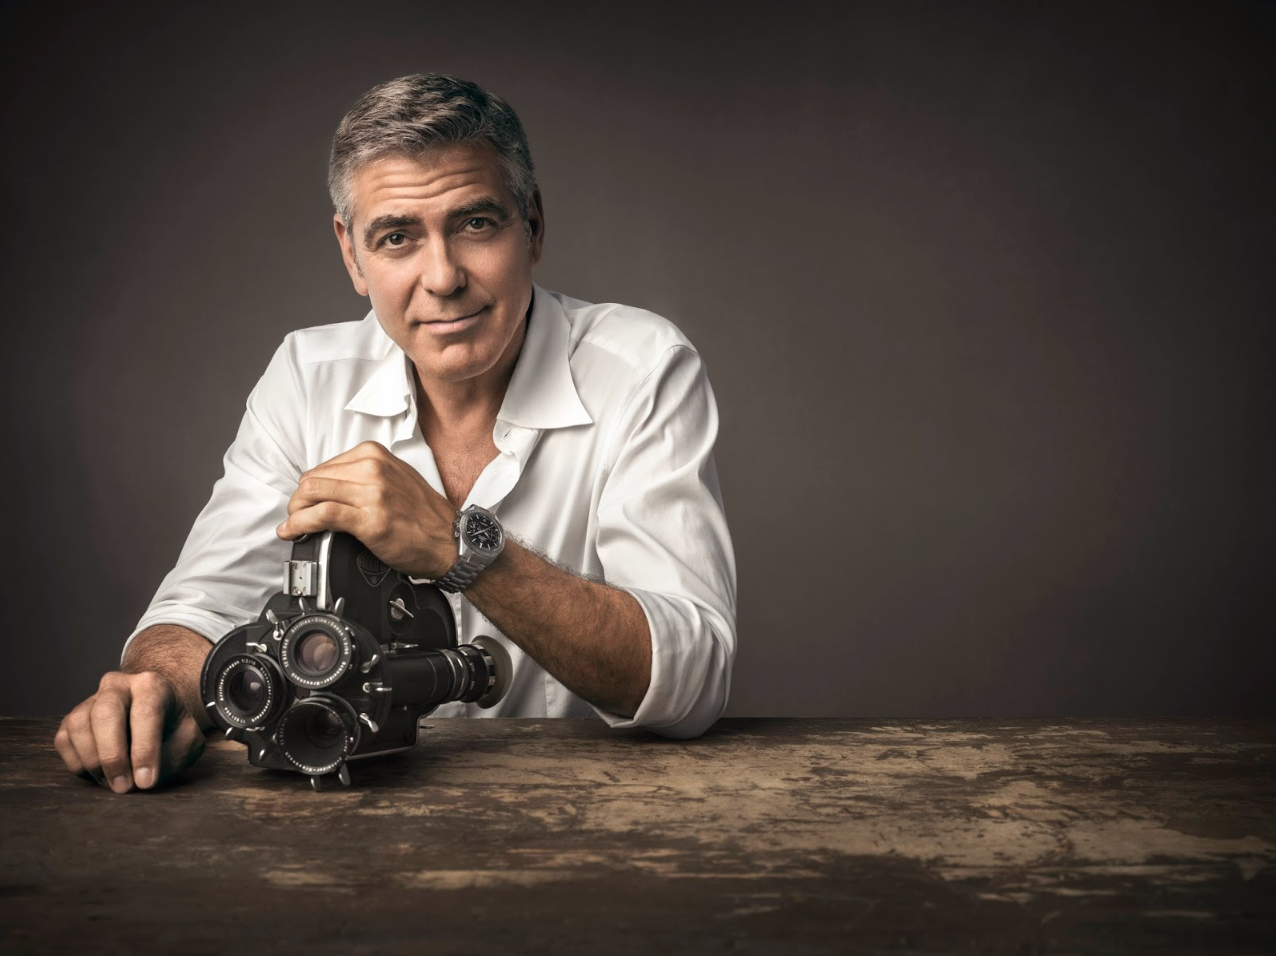 OMEGA - 2014
Photographer: Sam Jones
Model: George Clooney
Location: Como - Italy